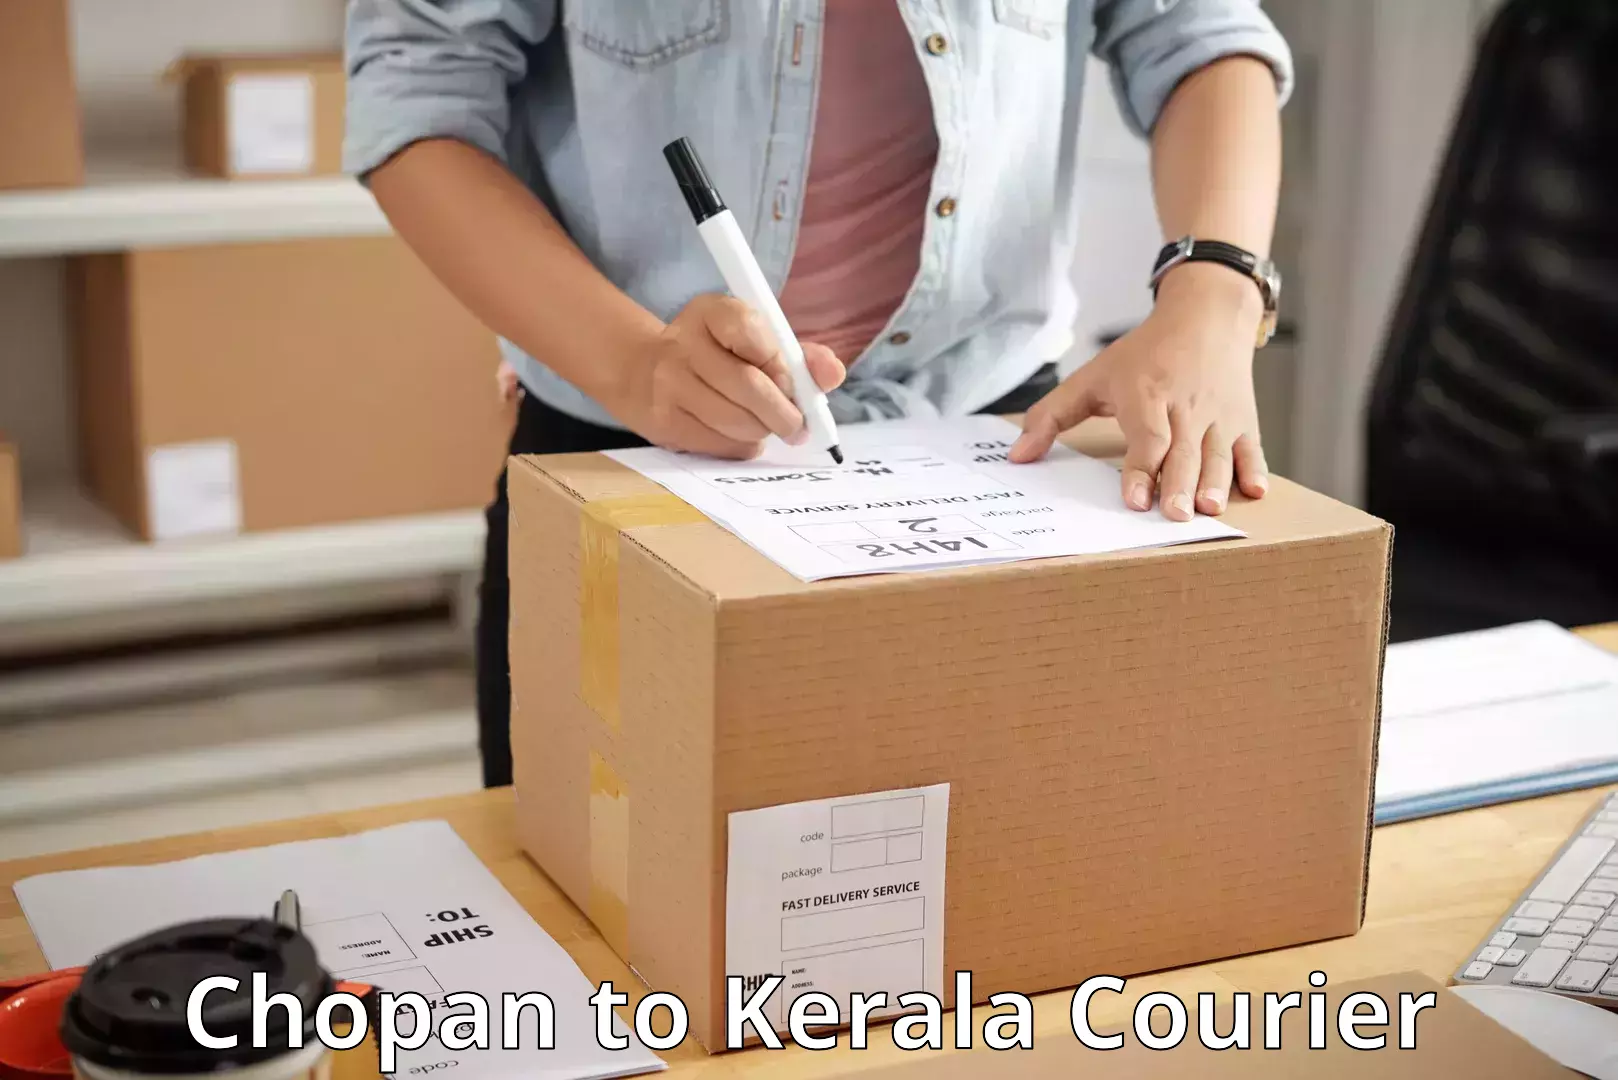 Urgent courier needs Chopan to Kerala